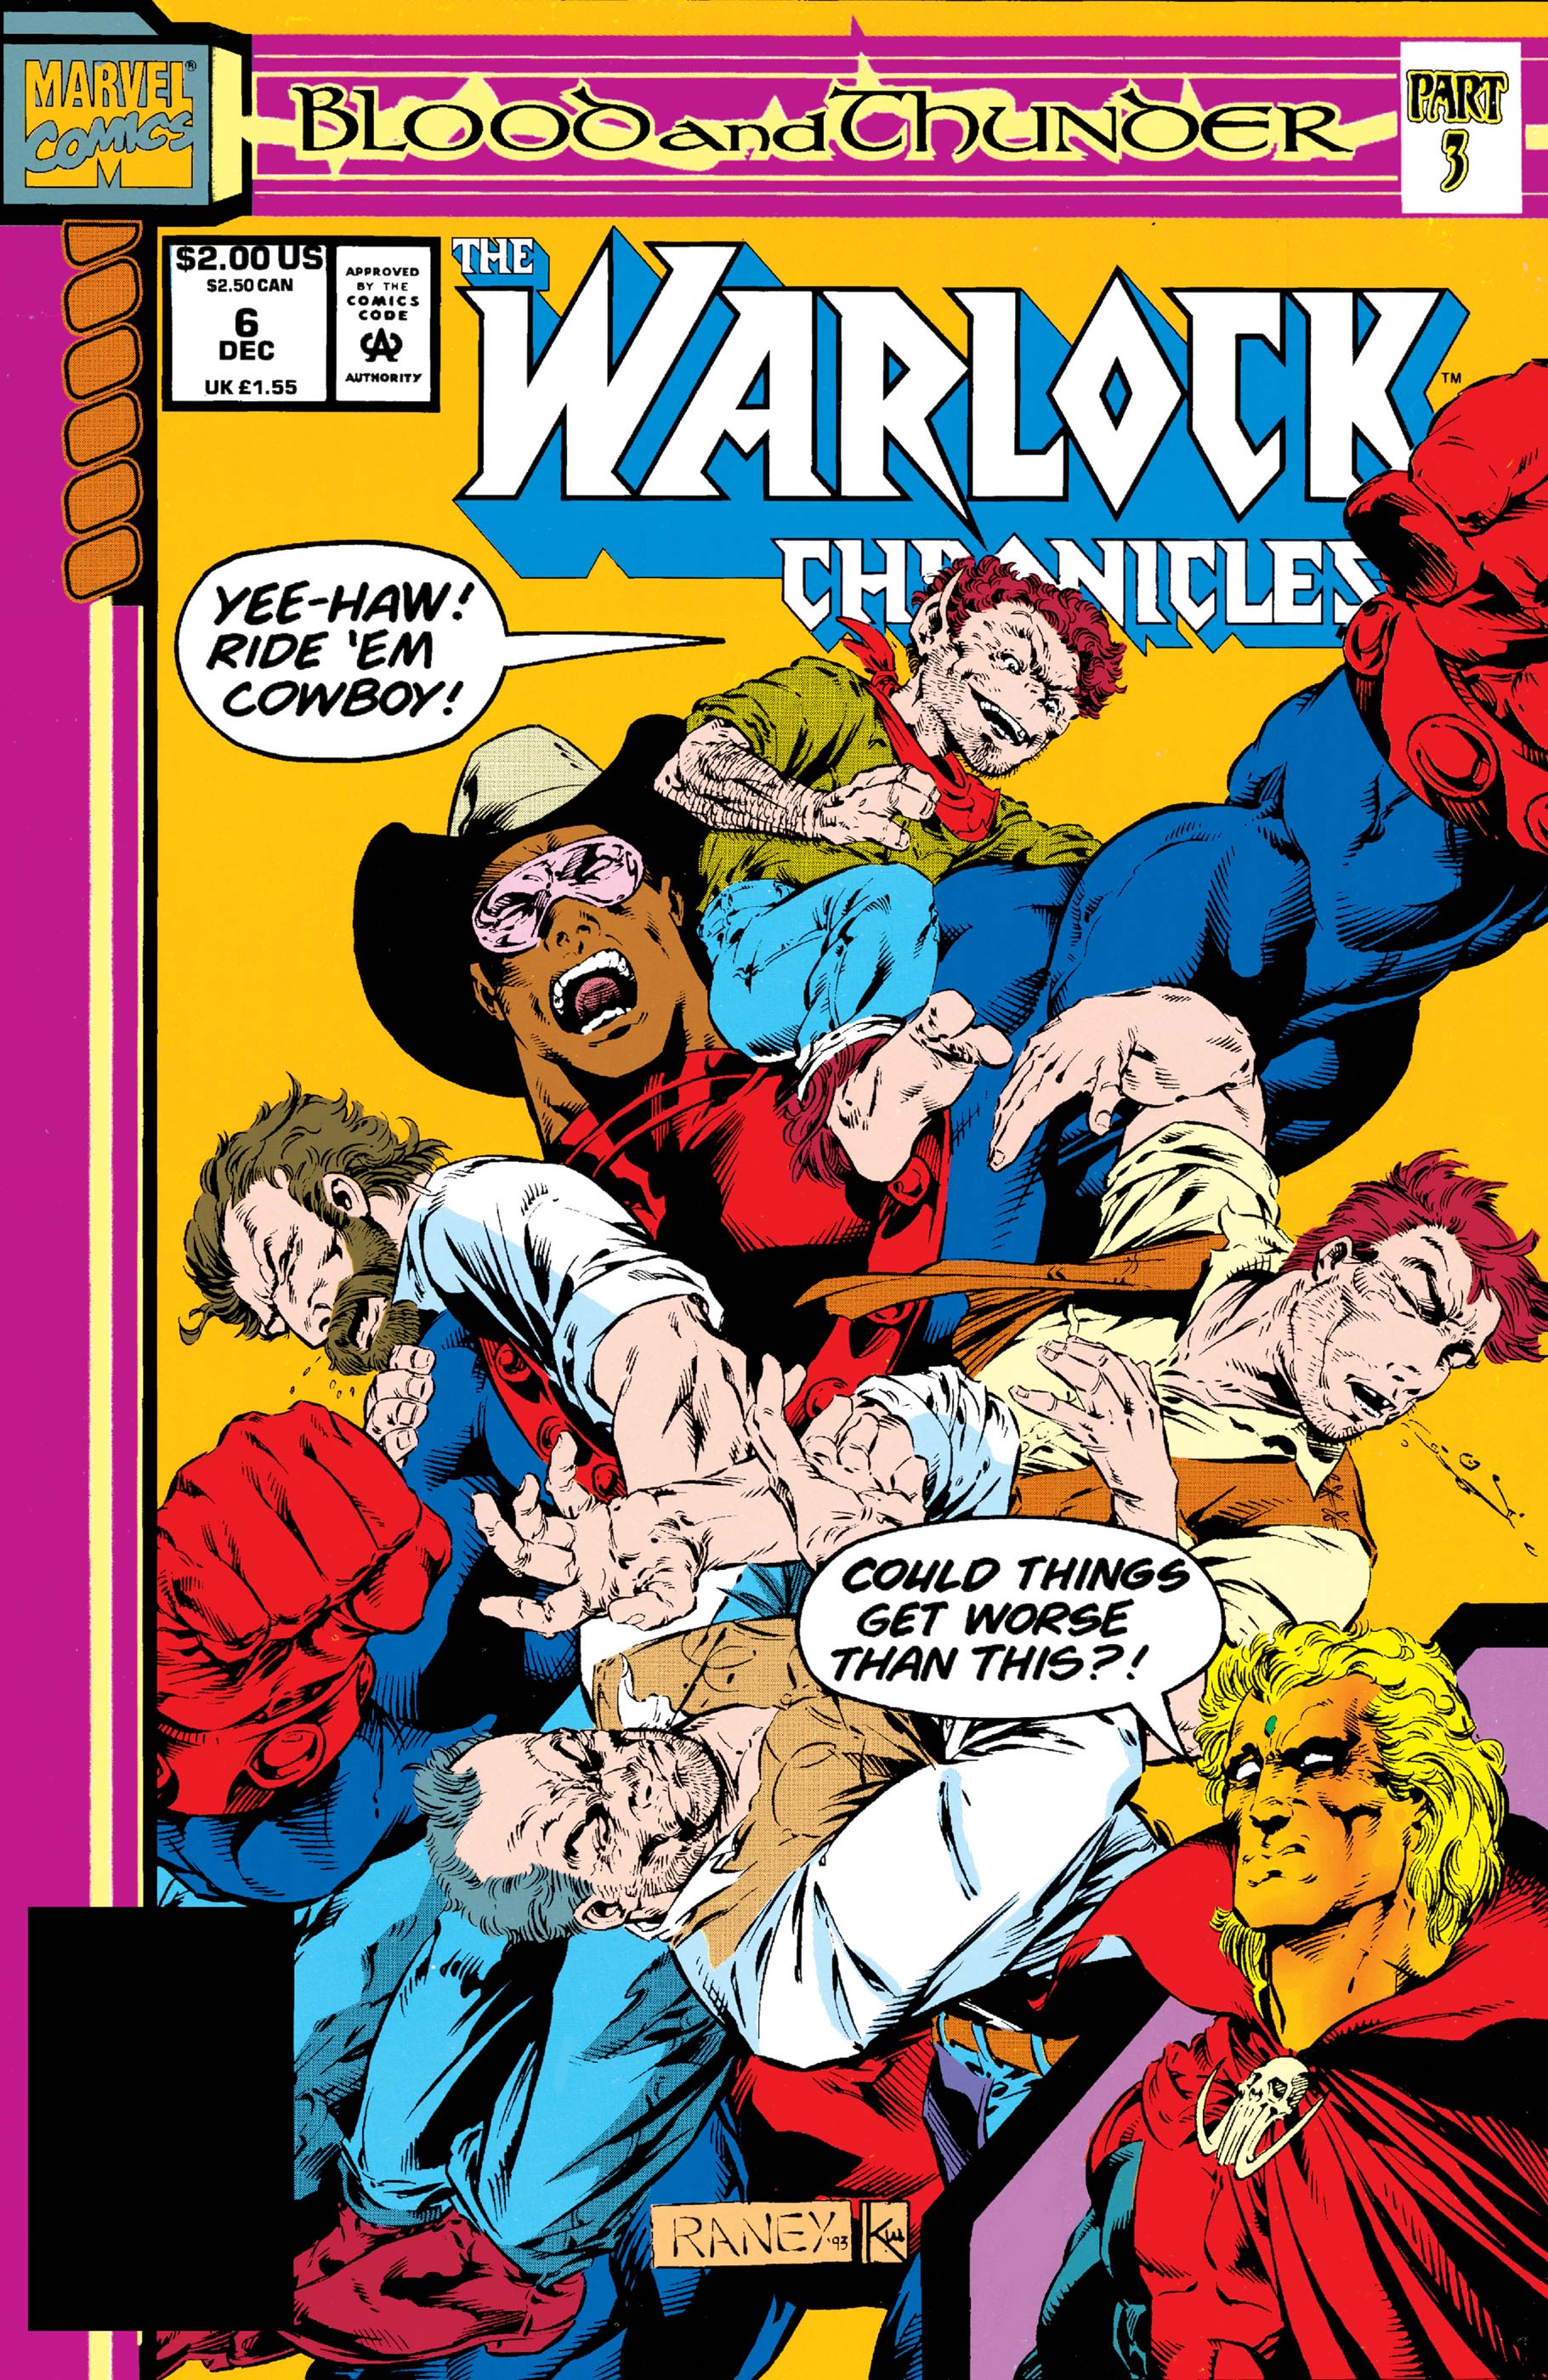 Warlock Chronicles (1993) #6